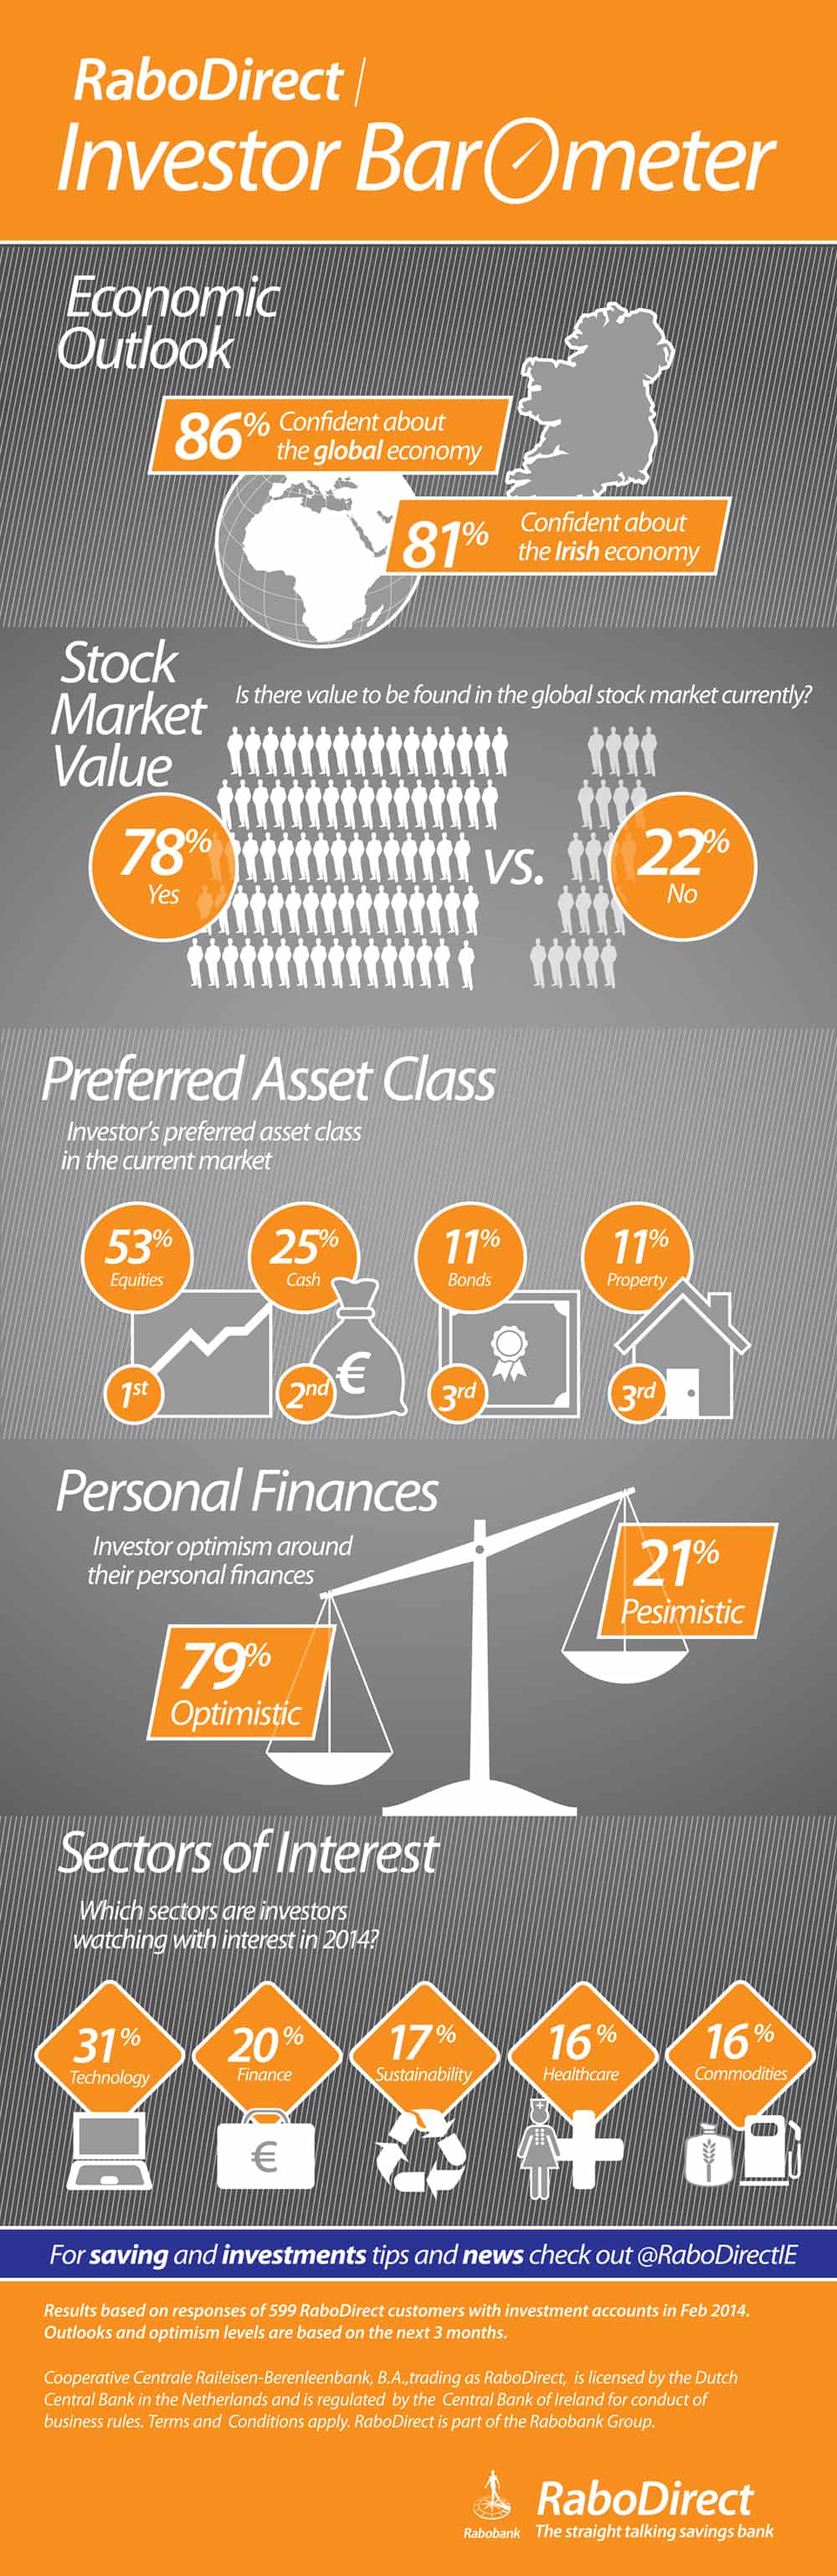 RaboDirect Investor Barometer Infographic